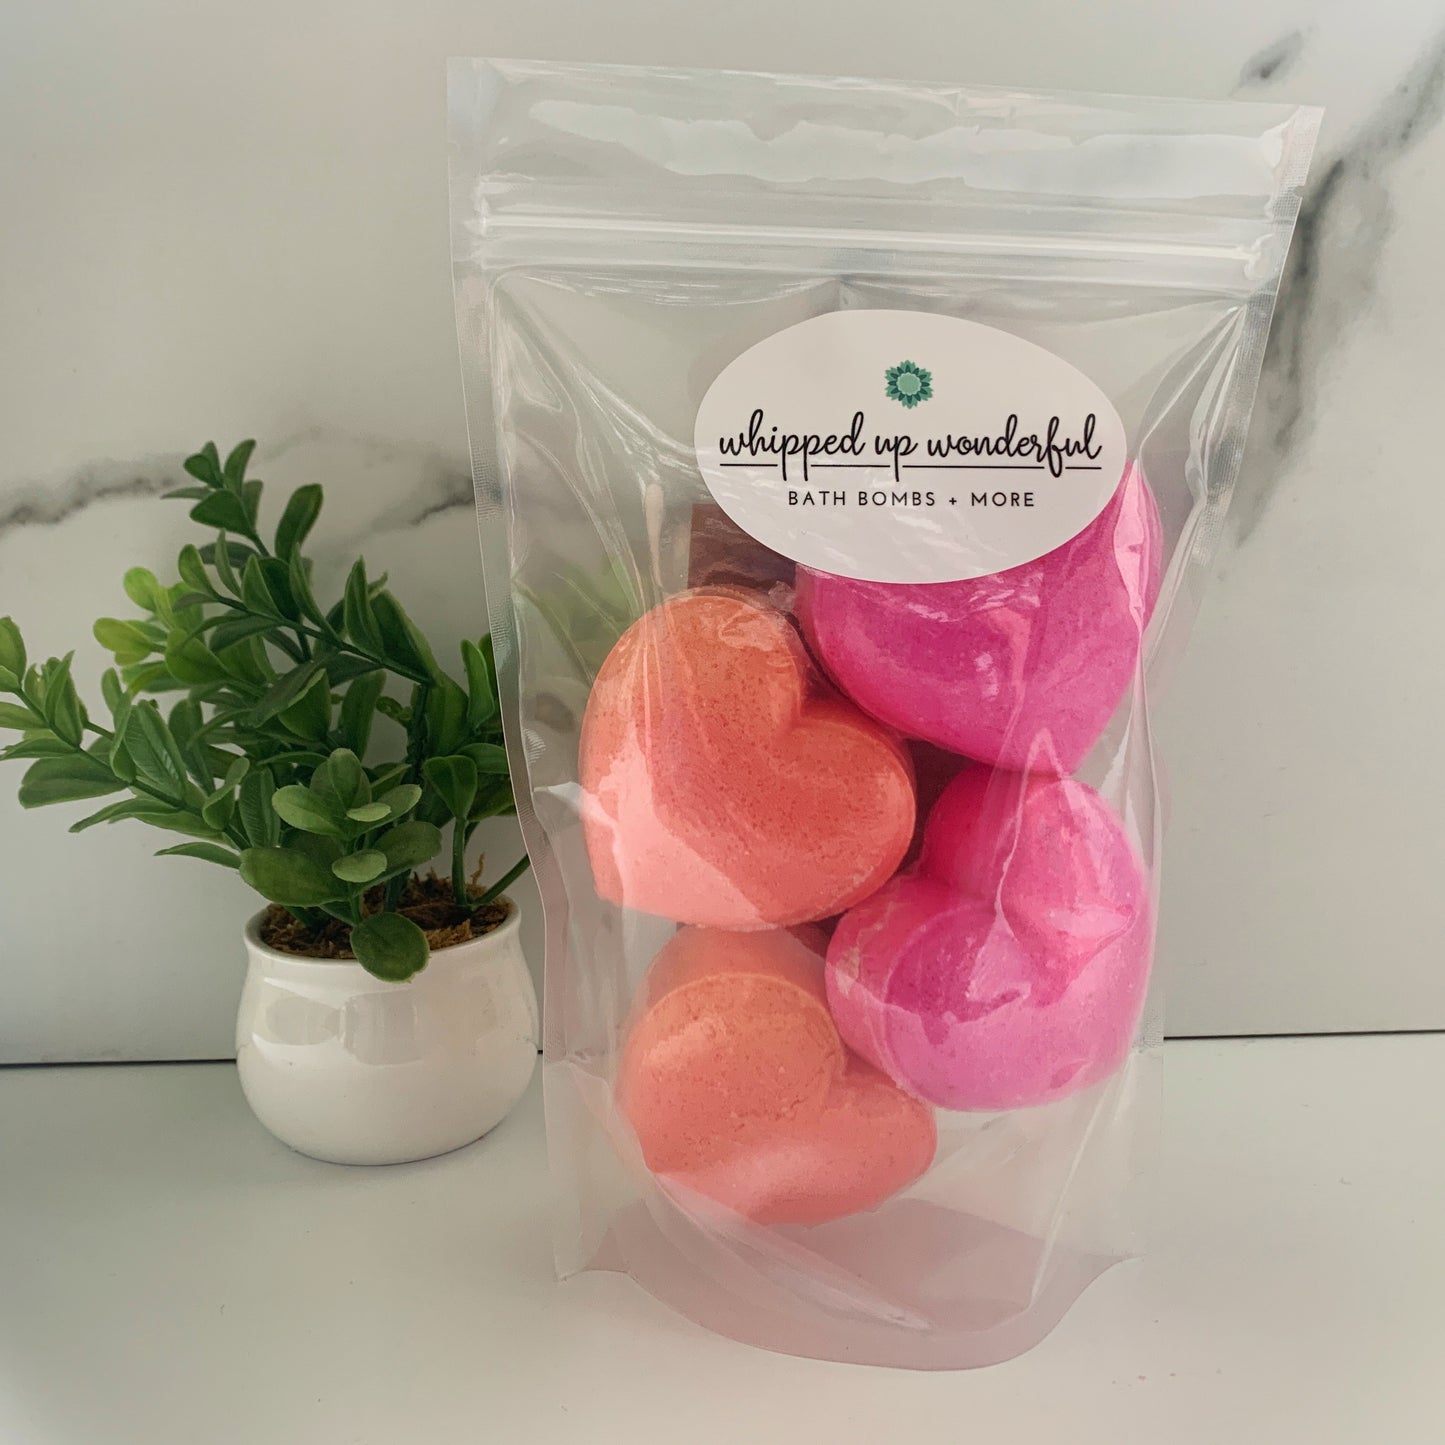 Sweetheart Bath Bombs - Love Spell and Grapefruit Lemongrass